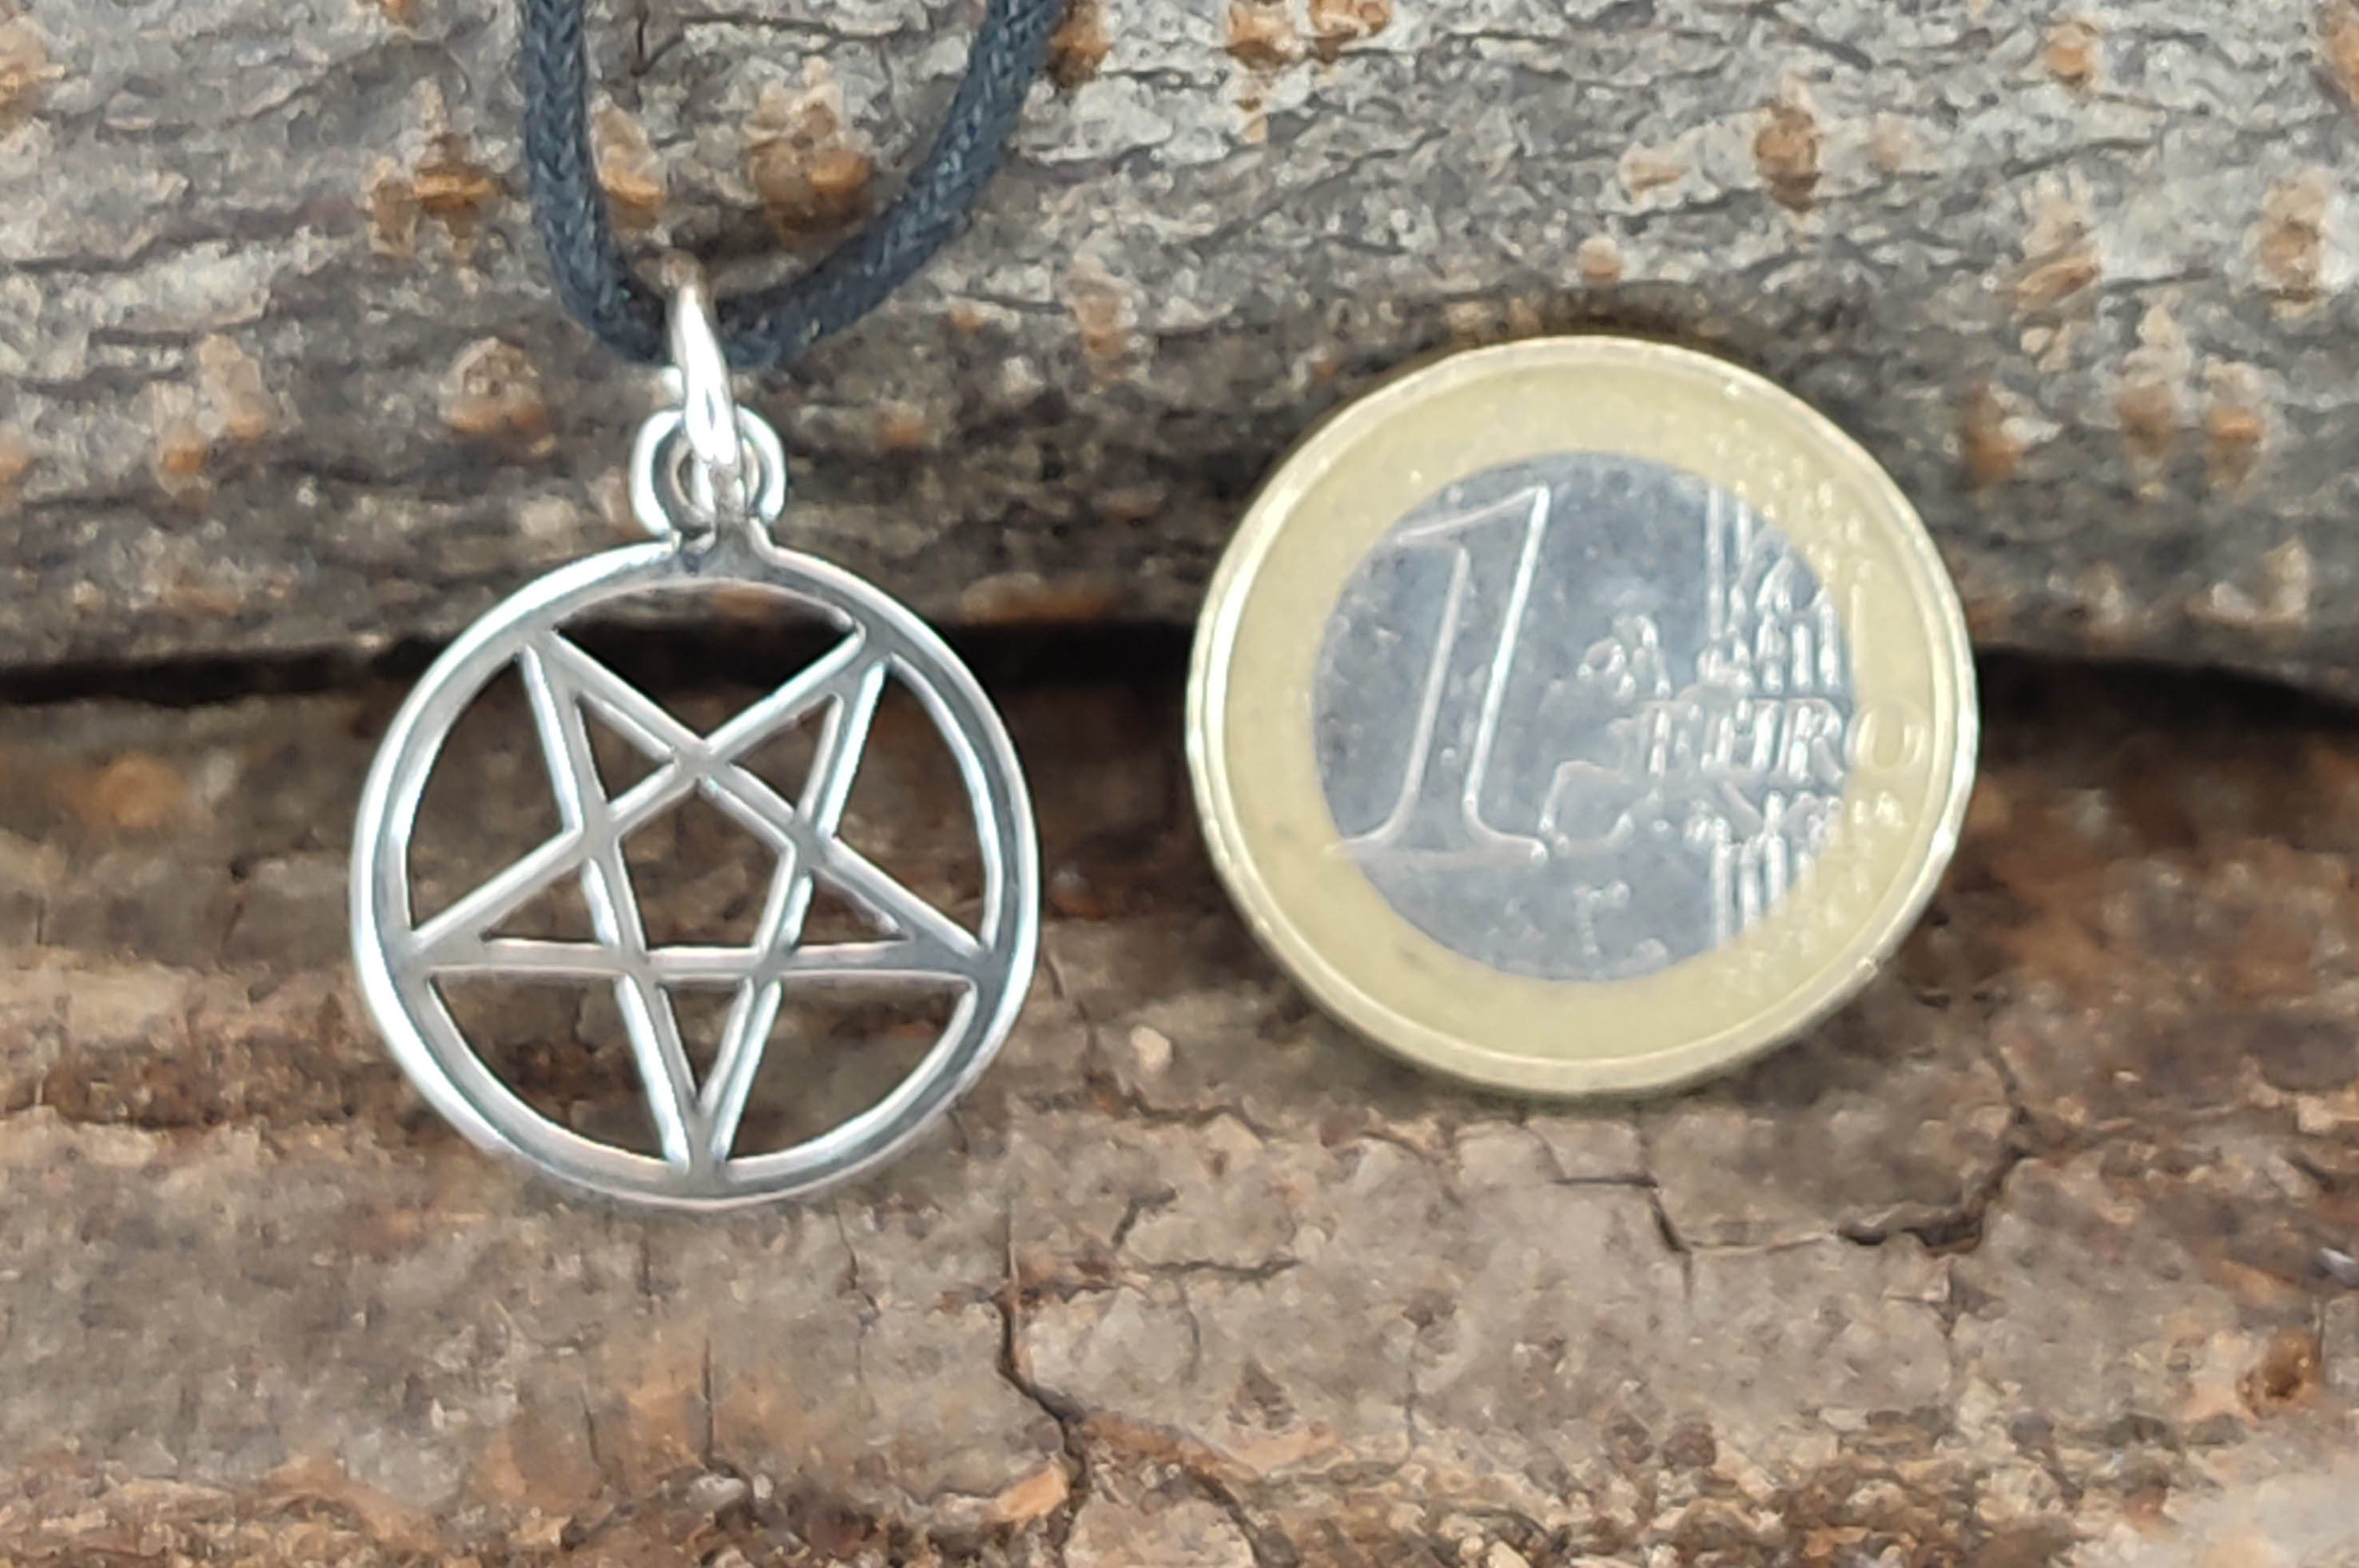 Luzifer of Magie Drudenfuß, (Sterlingsilber) Satan Teufel Si.52 925 Pentagramm Silber Leather Kiss Kettenanhänger